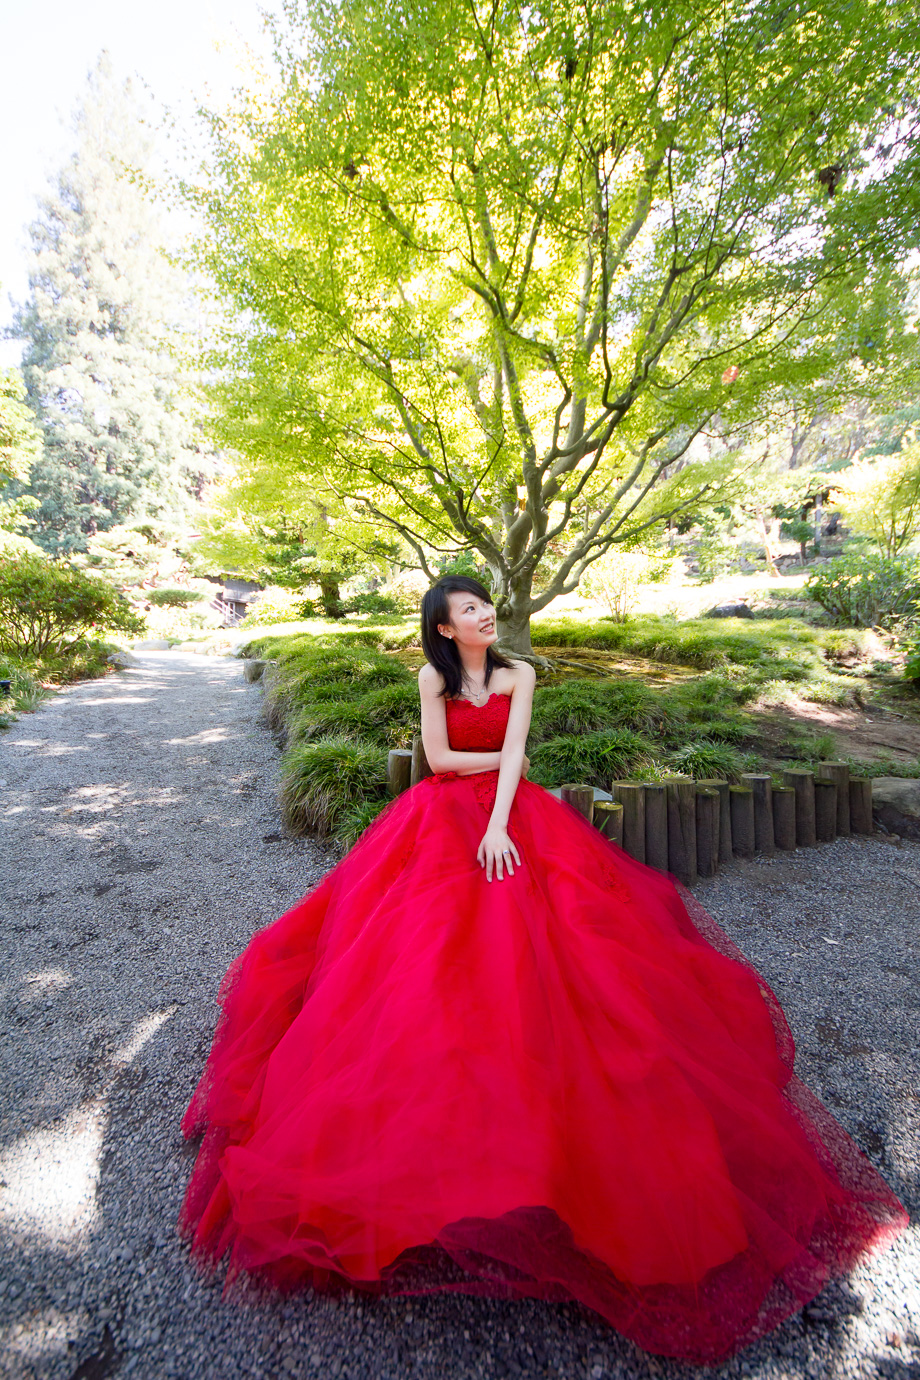 Long, flowing red dress under green trees at Hakone Japanese Gardens